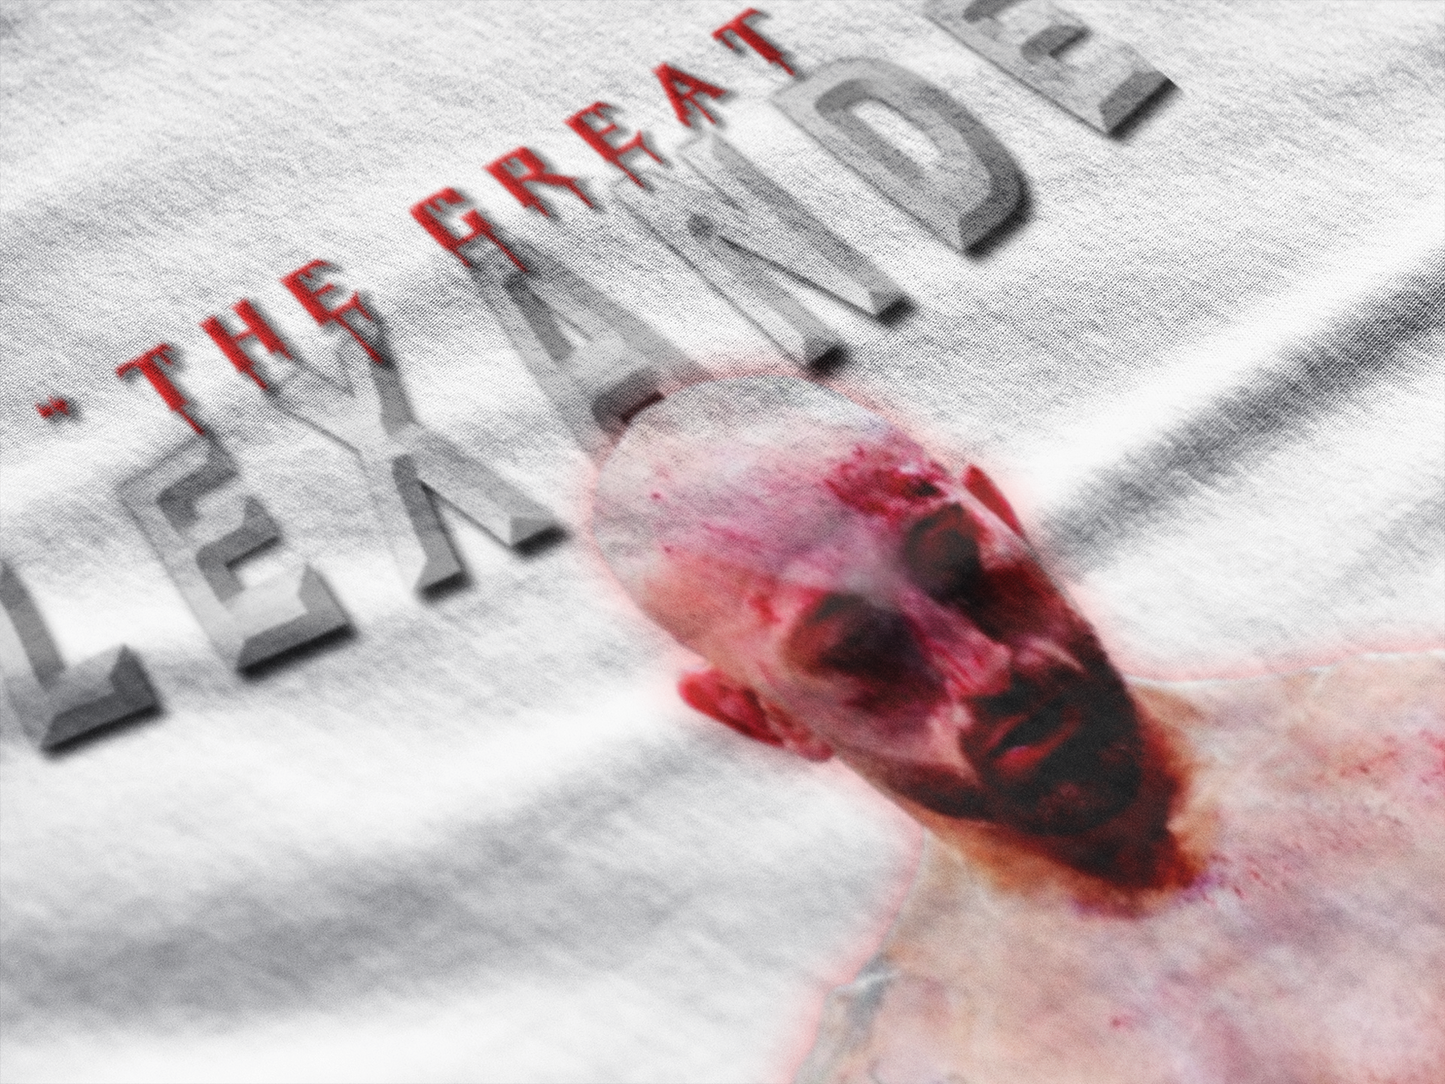 ALEXANDER "THE GREAT" VOLKANOVSKI UFC Fighter Graphic Tee